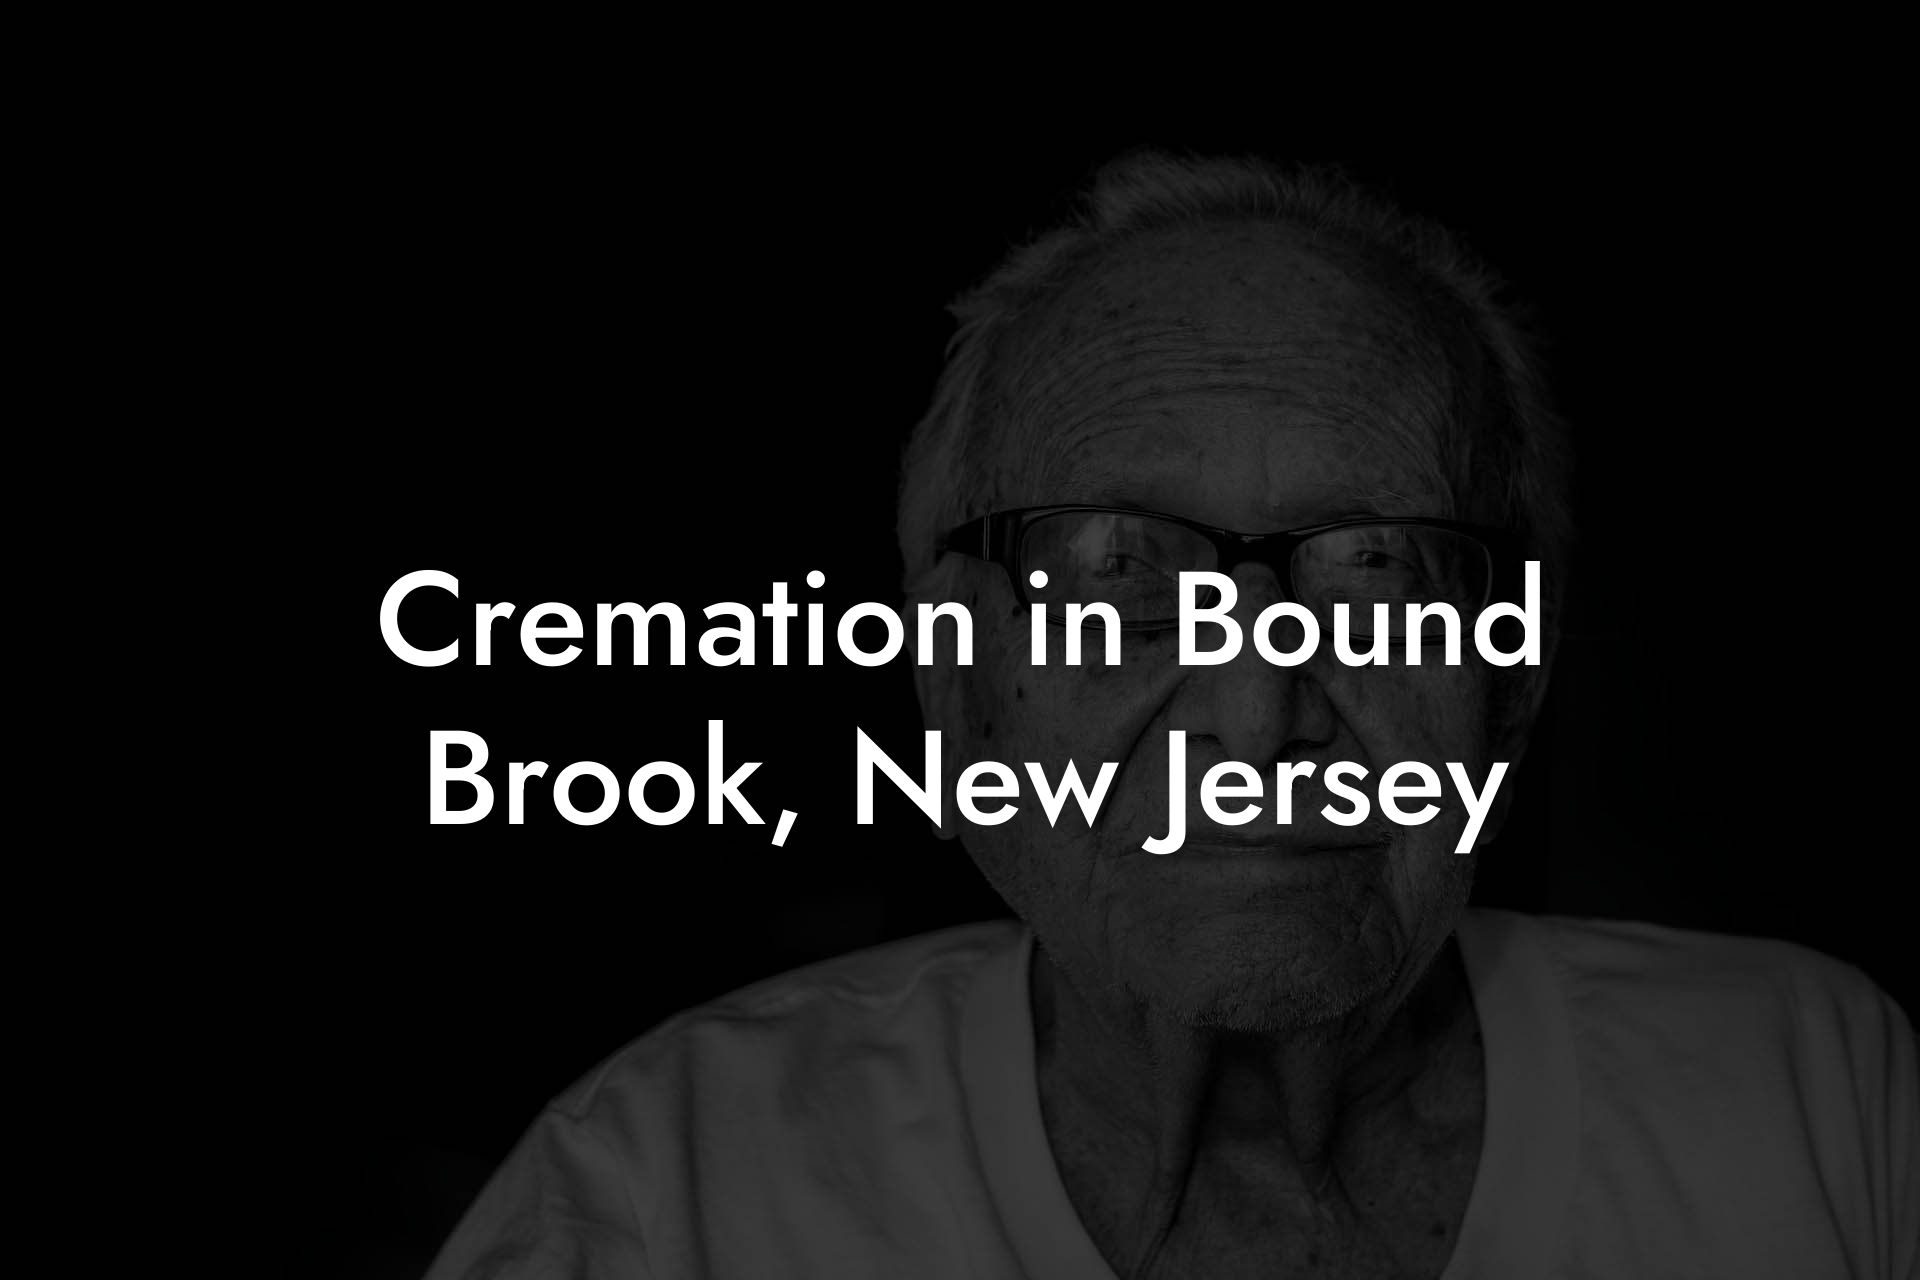 Cremation in Bound Brook, New Jersey